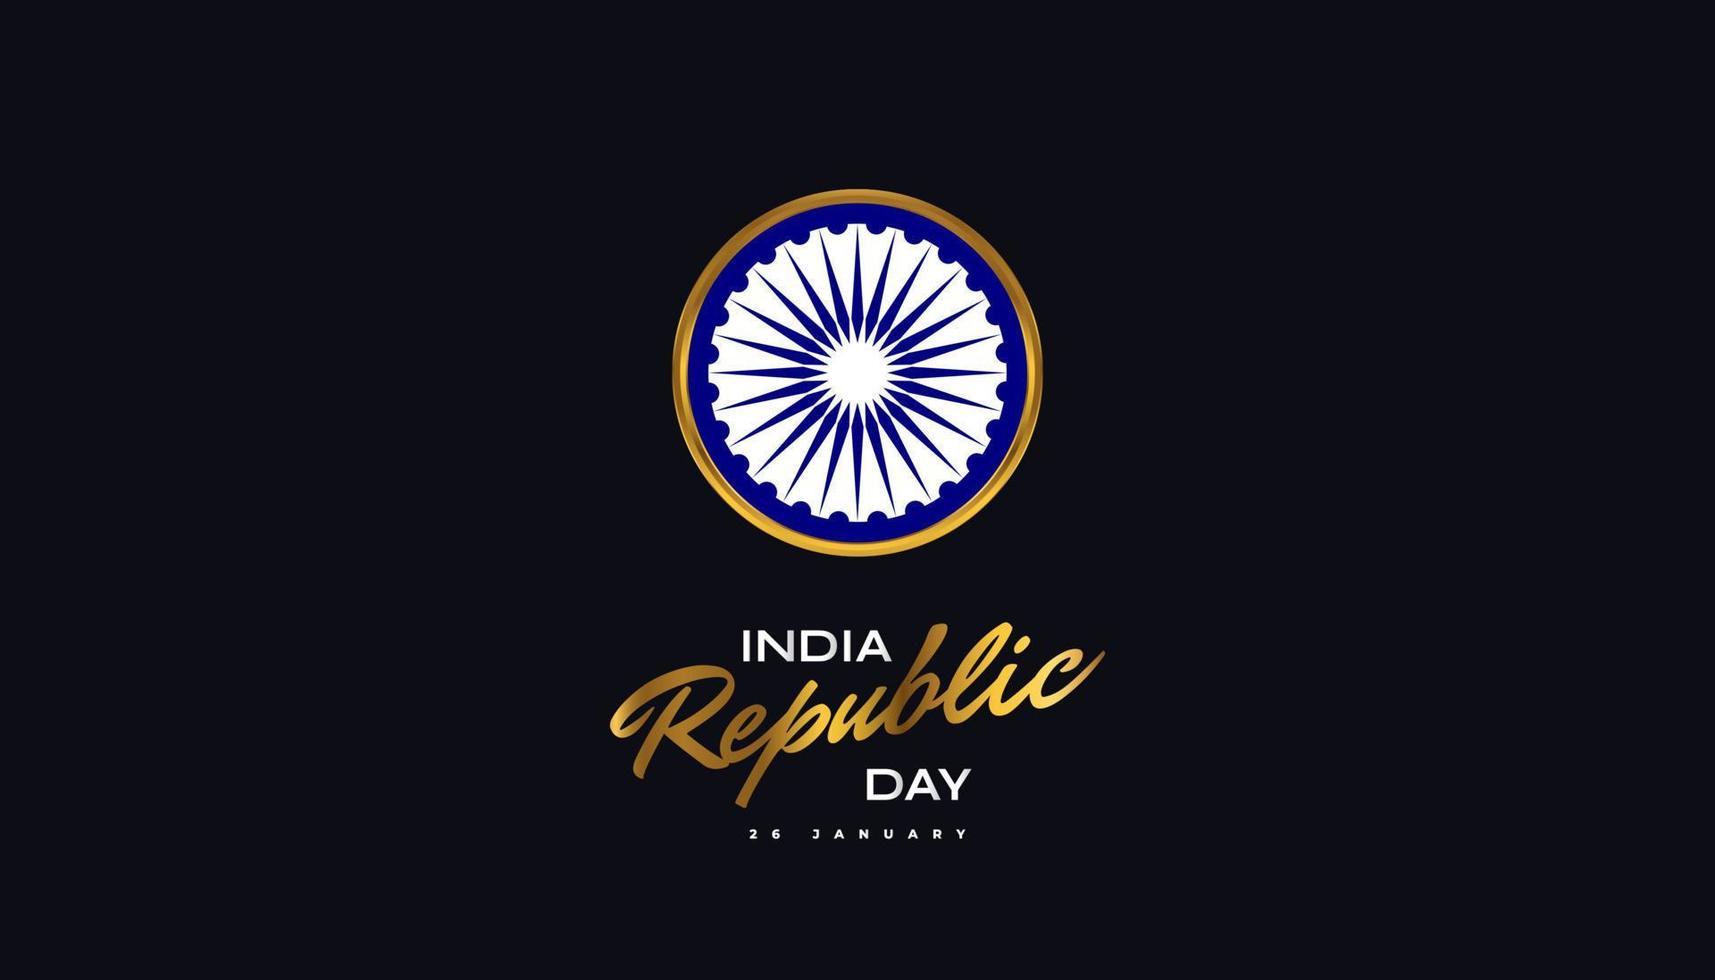 26th January Happy Republic Day of India. Indian Republic Day Celebration Background with Ashoka Chakra Isolated on Dark Background vector